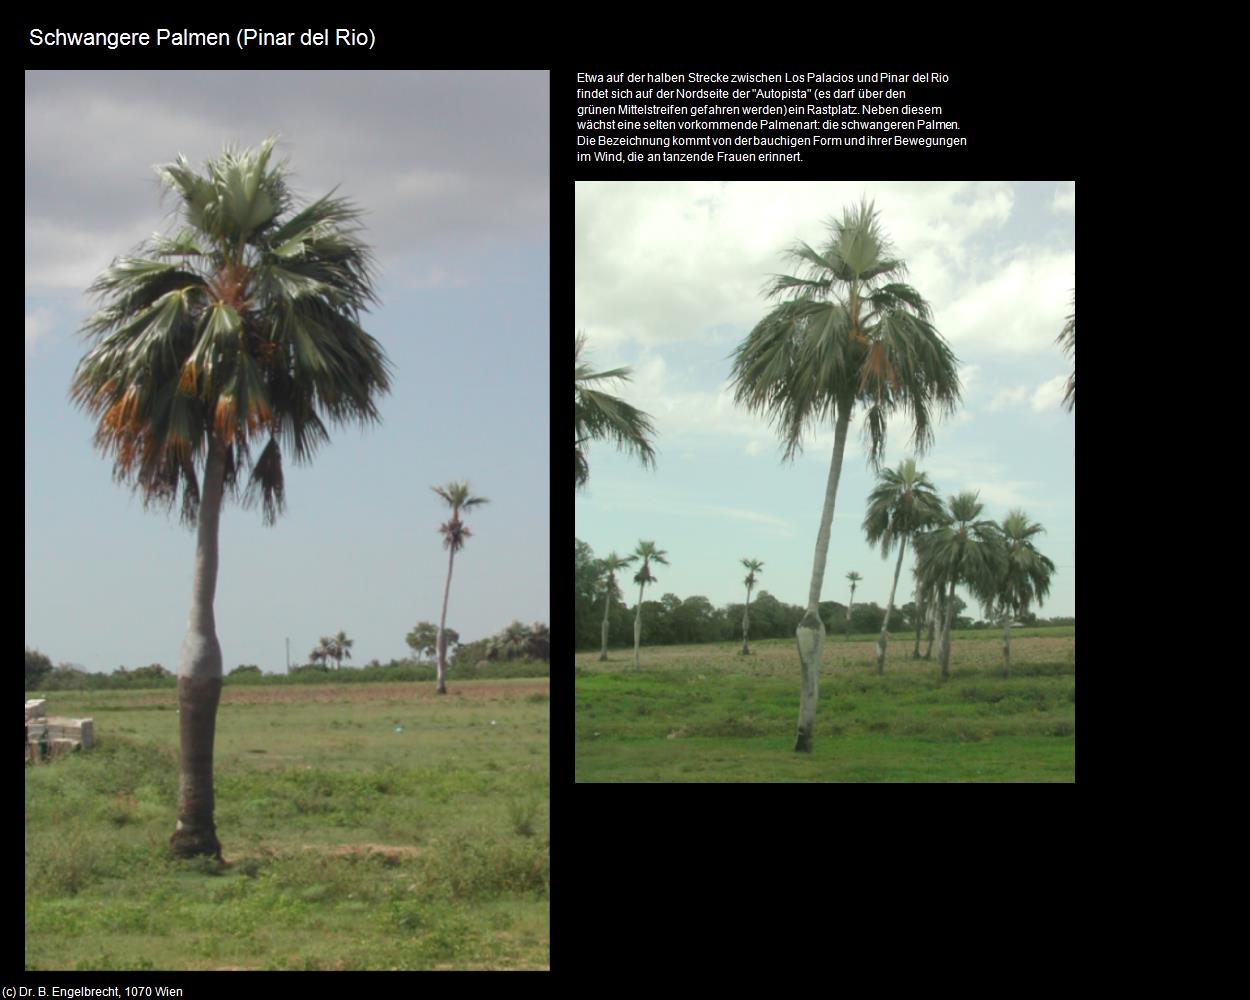 Schwangere Palmen (Pinar del Rio) in KUBA